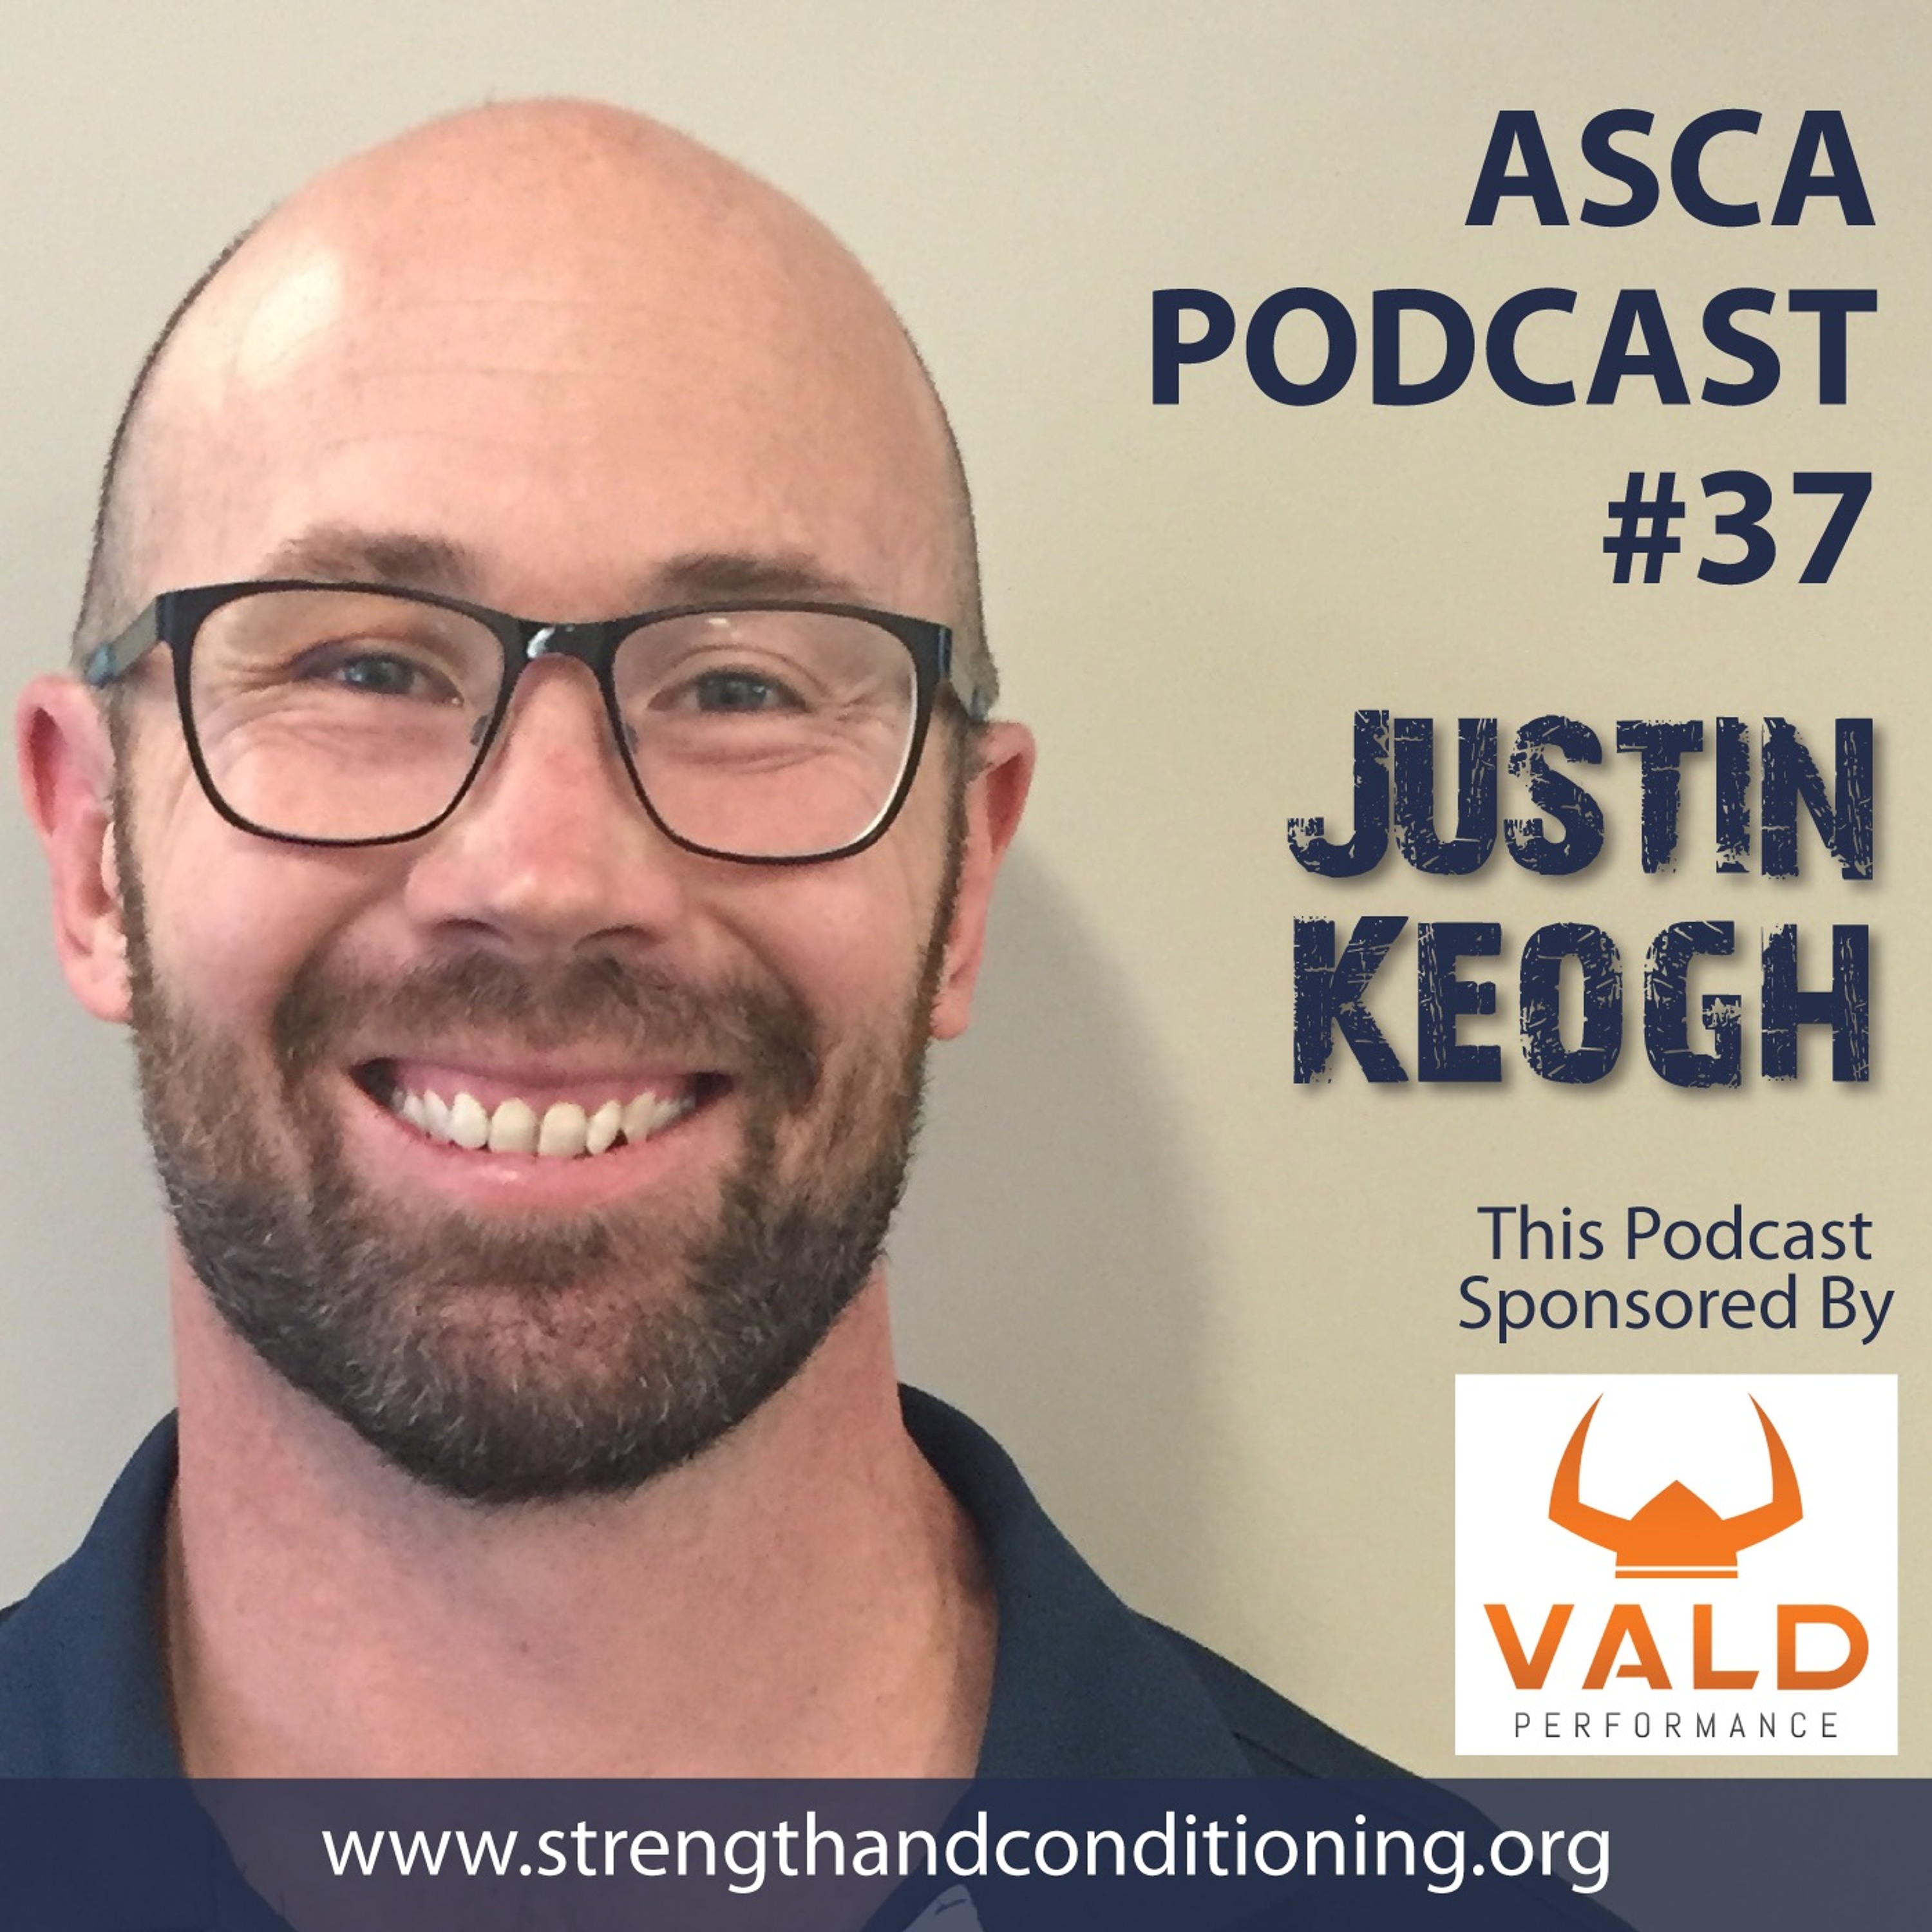 ASCA Podcast #37 - Dr. Justin Keogh